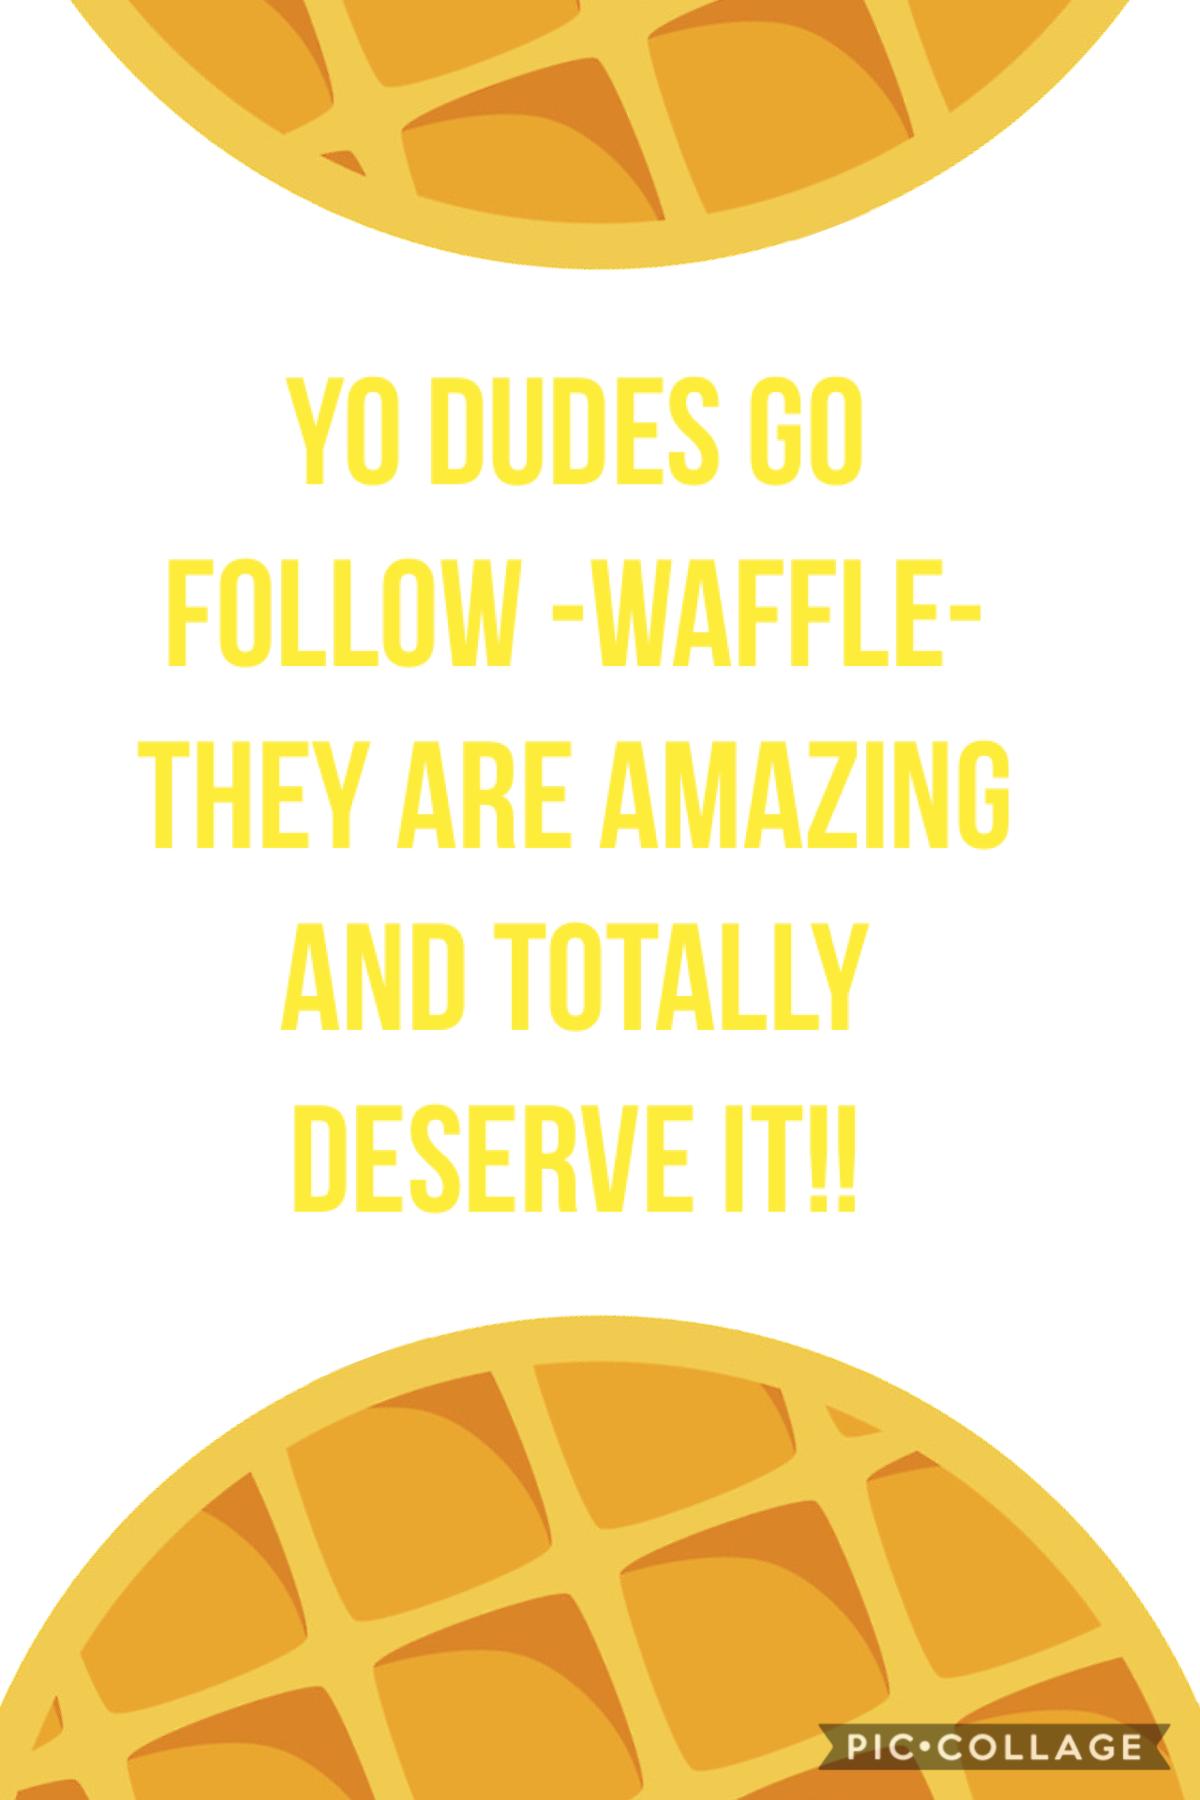 Go follow -waffle-